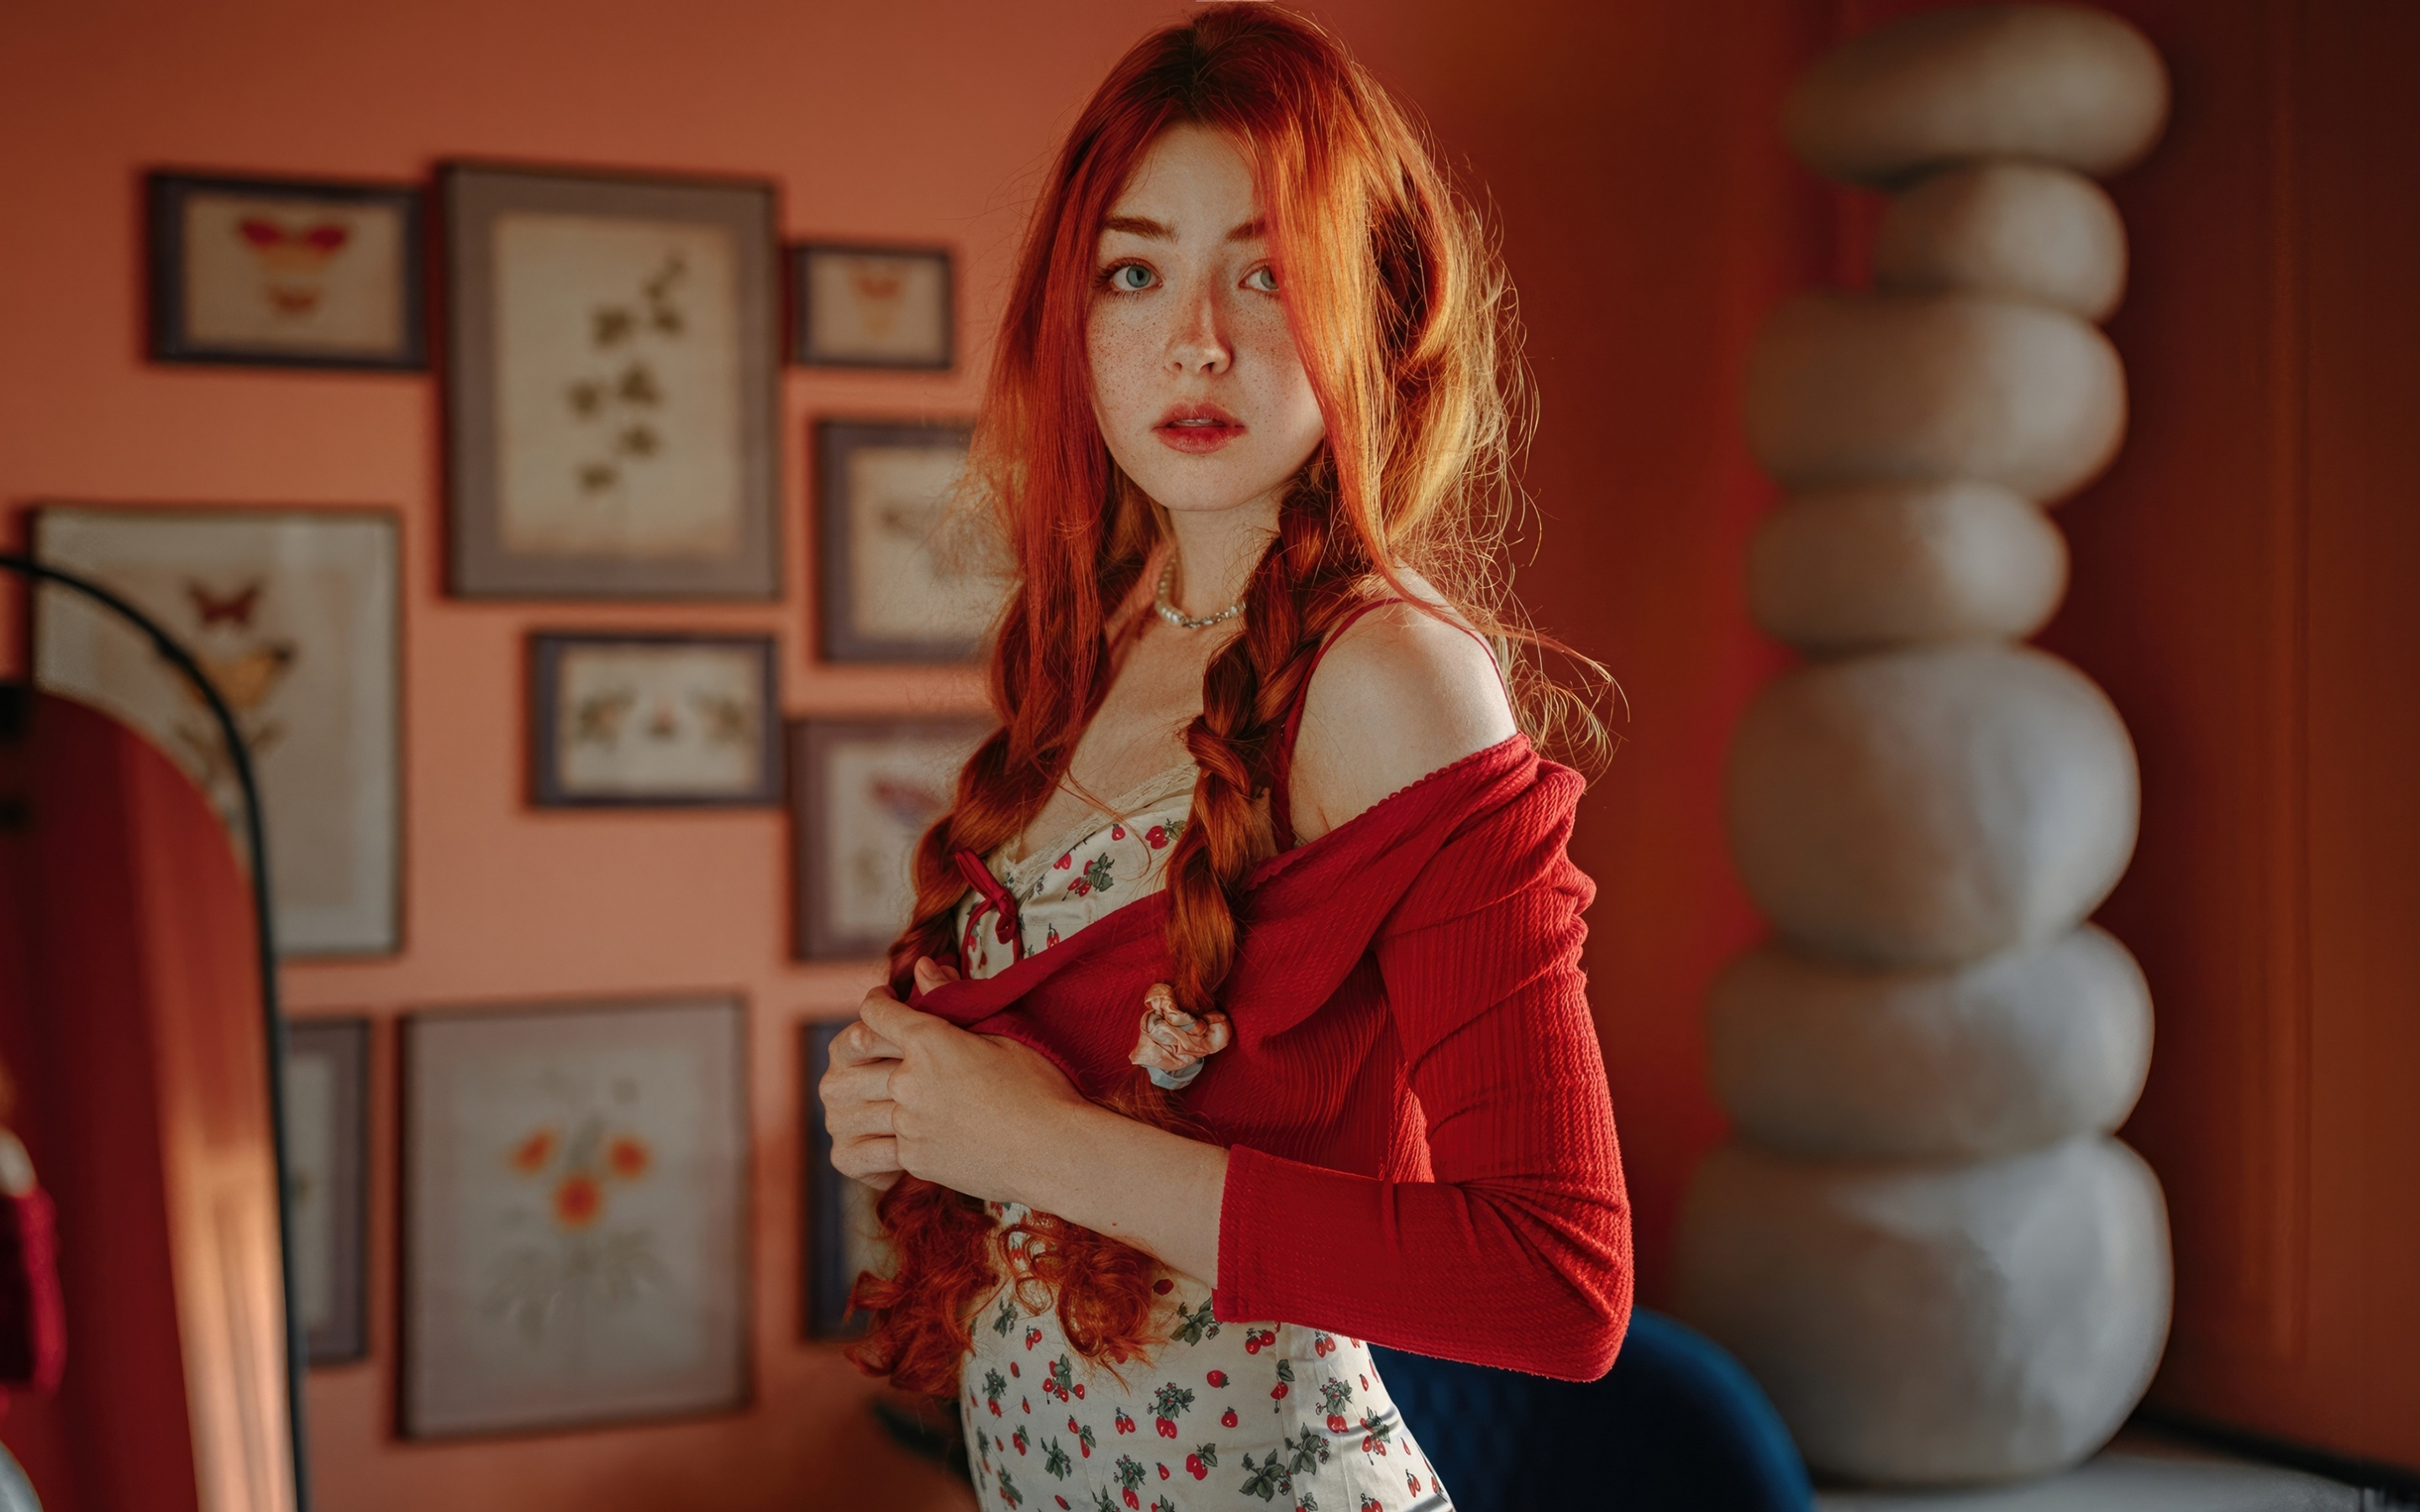 Redhead girl, model, cute pony tails, 2880x1800 wallpaper